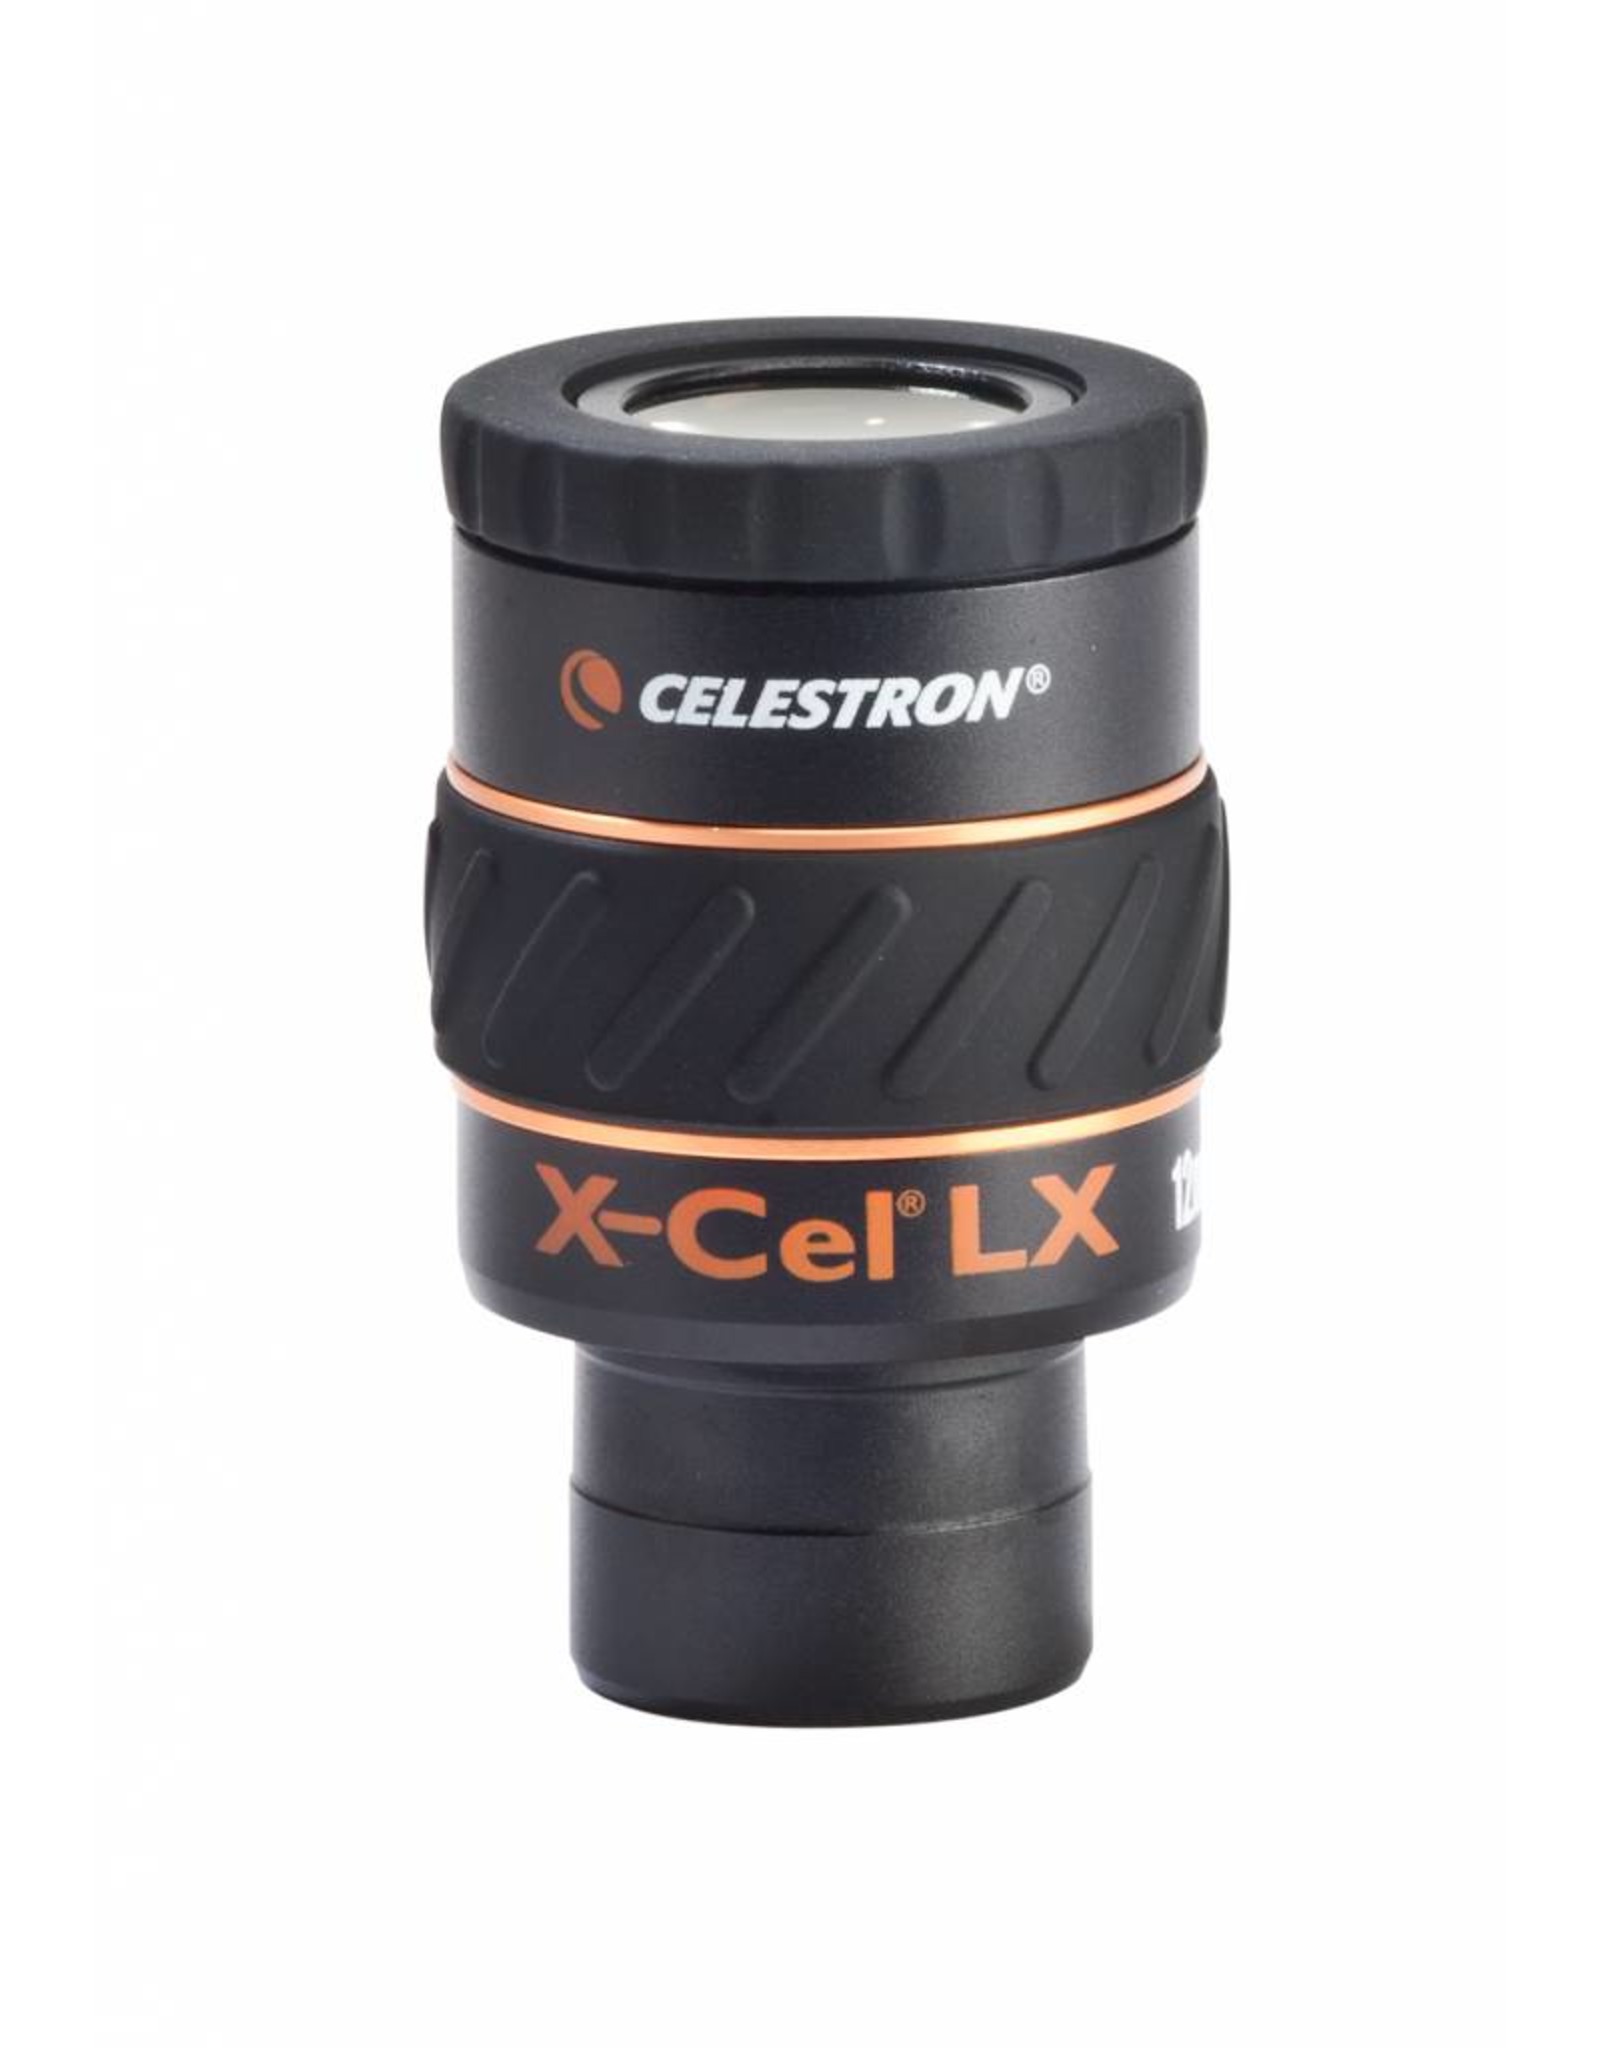 Celestron Celestron X-Cel LX 12 mm Eyepiece